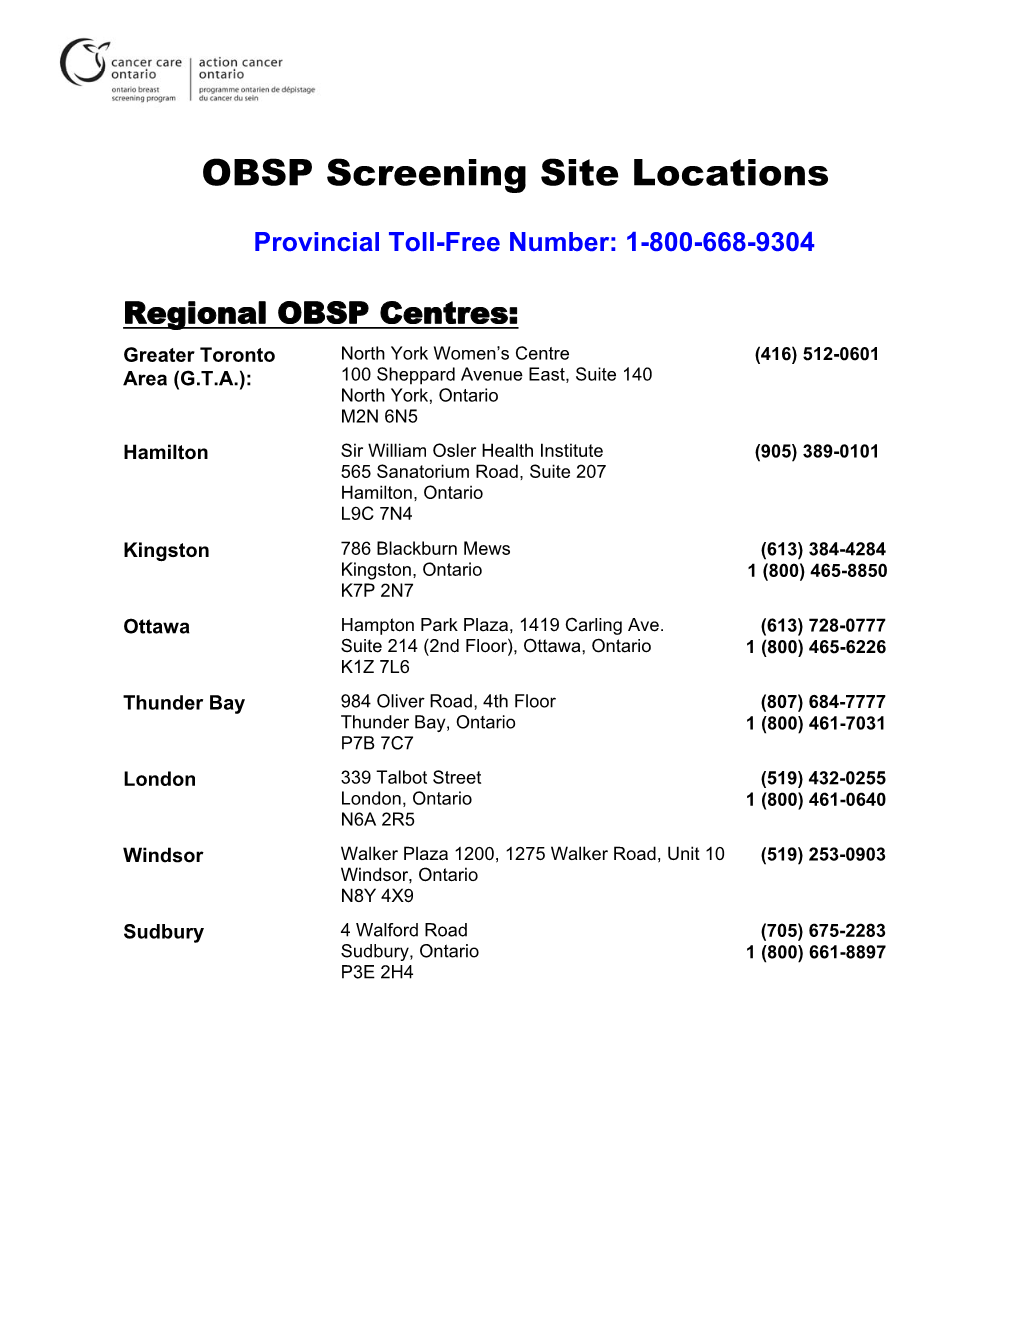 OBSP Screening Site Locations